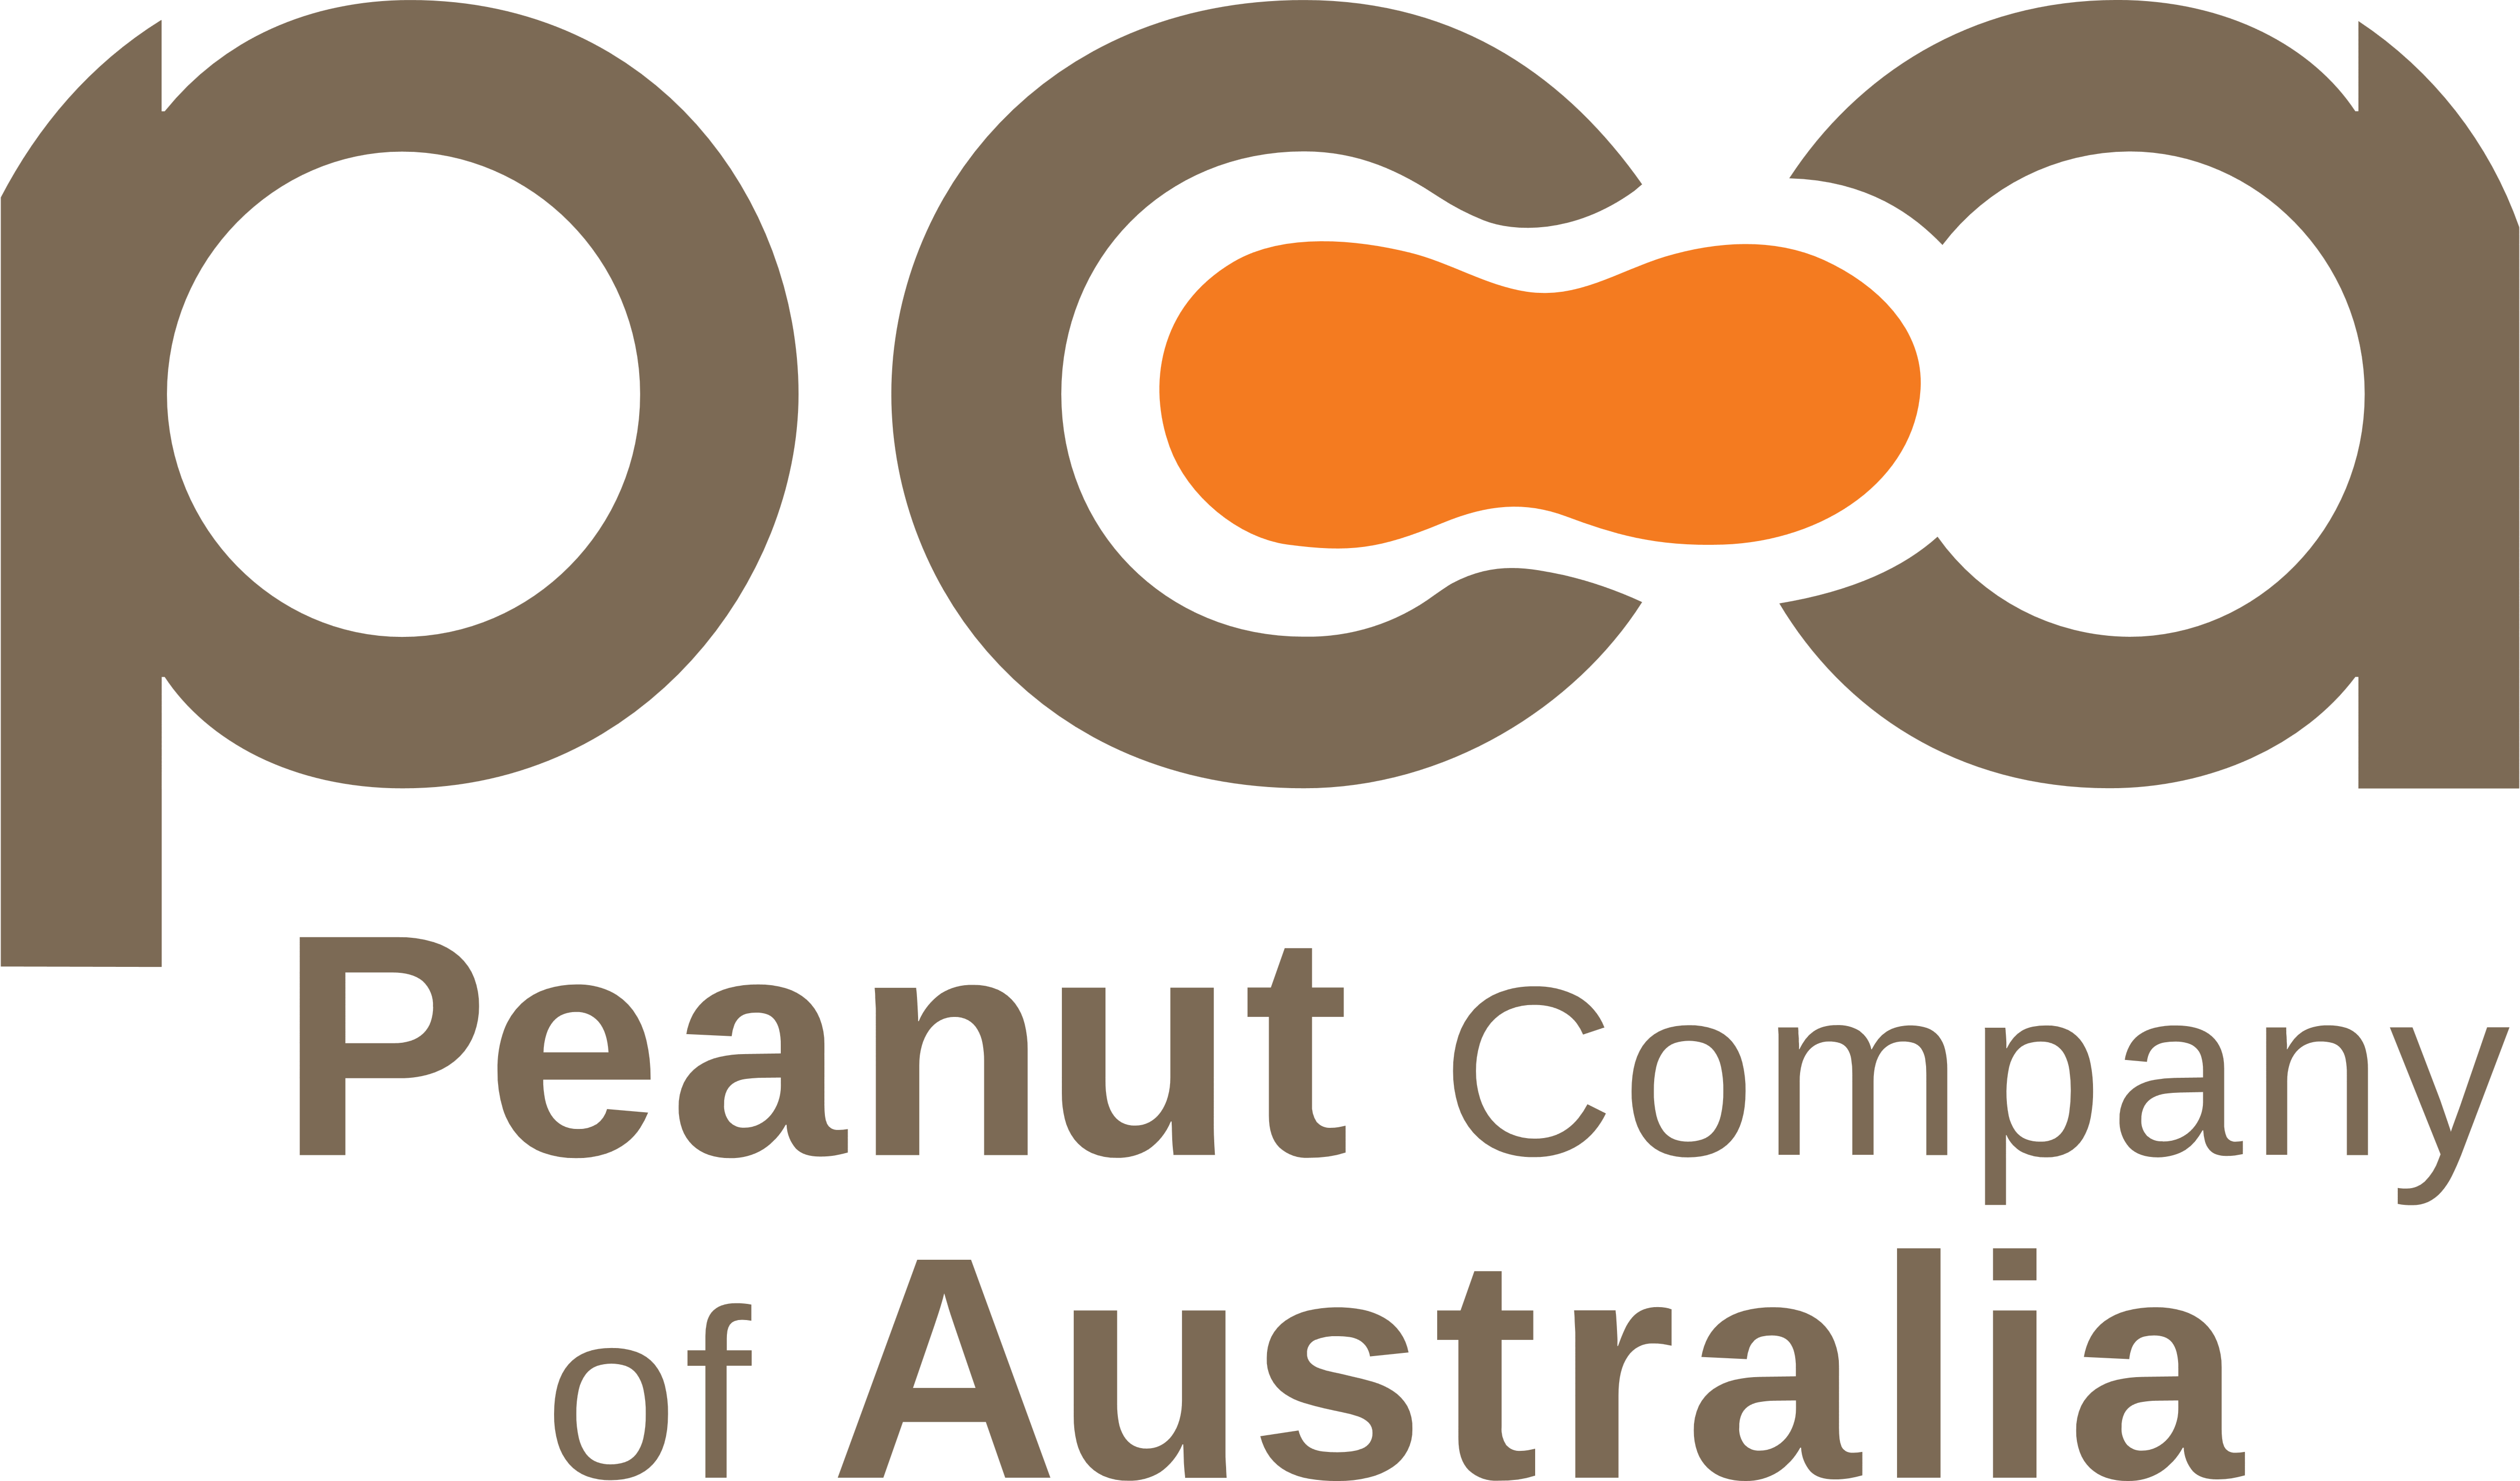 The Peanut Company of Australia – Logos Download